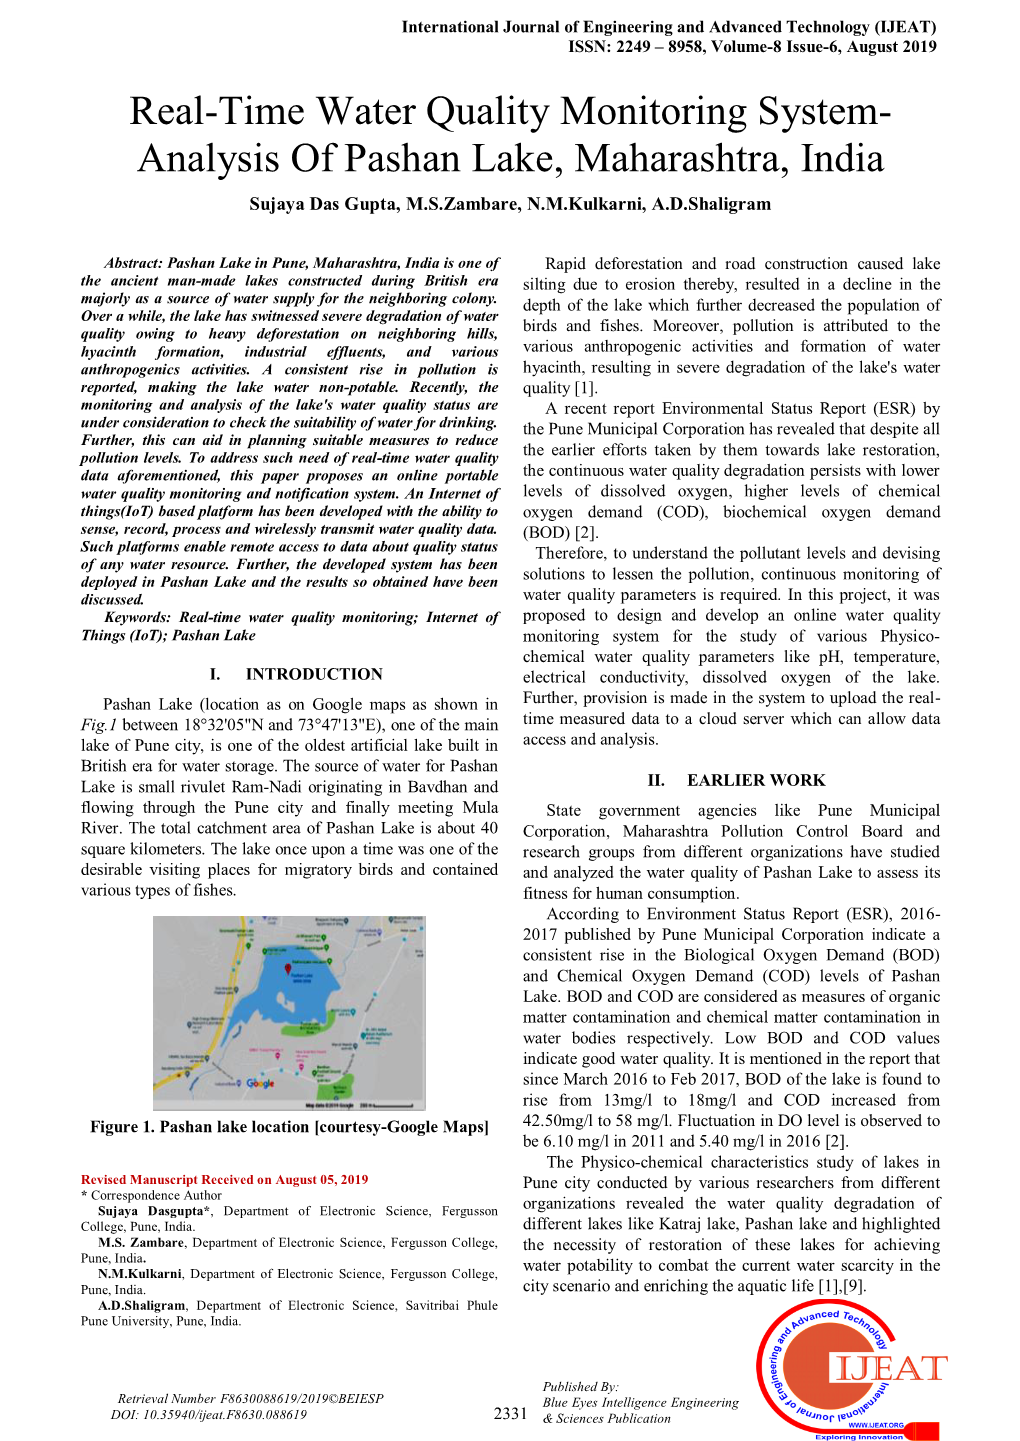 Real-Time Water Quality Monitoring System- Analysis of Pashan Lake, Maharashtra, India Sujaya Das Gupta, M.S.Zambare, N.M.Kulkarni, A.D.Shaligram